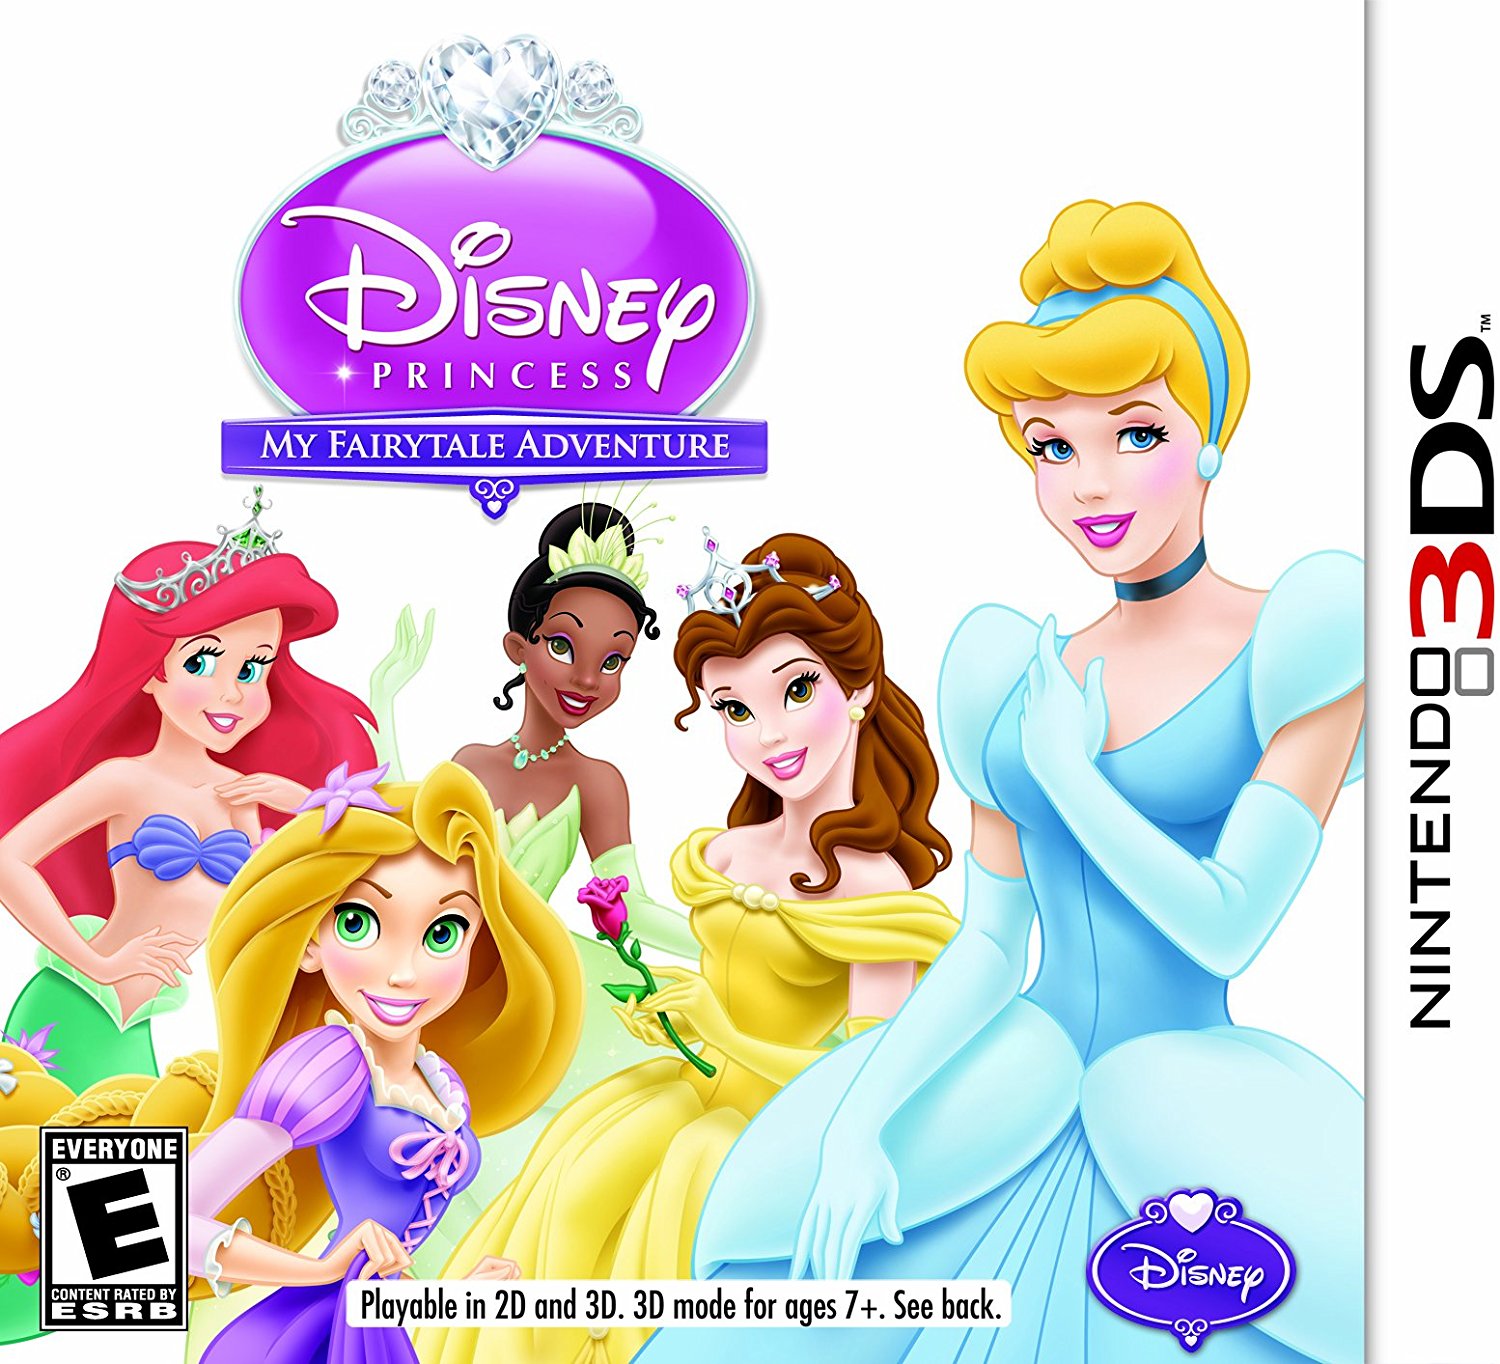 Игра принцесса 3. Игра Disney Princess Adventure. Нинтендо ДС Дисней. Игра принцессы Диснея. Игры про принцесс Дисней на ПК.